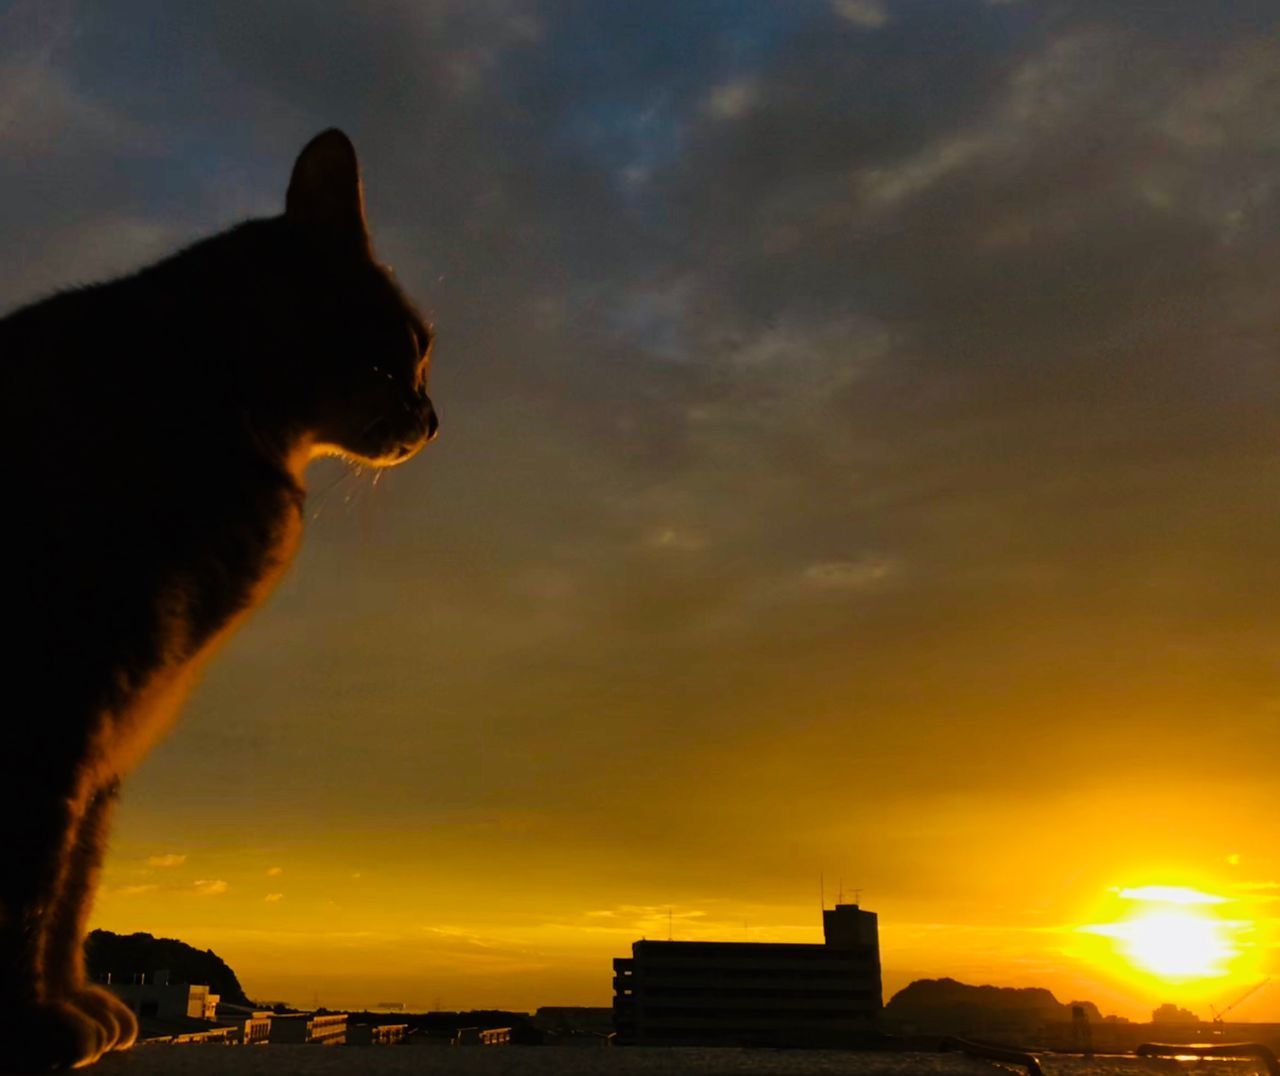 SILHOUETTE CAT ON ORANGE SUNSET SKY